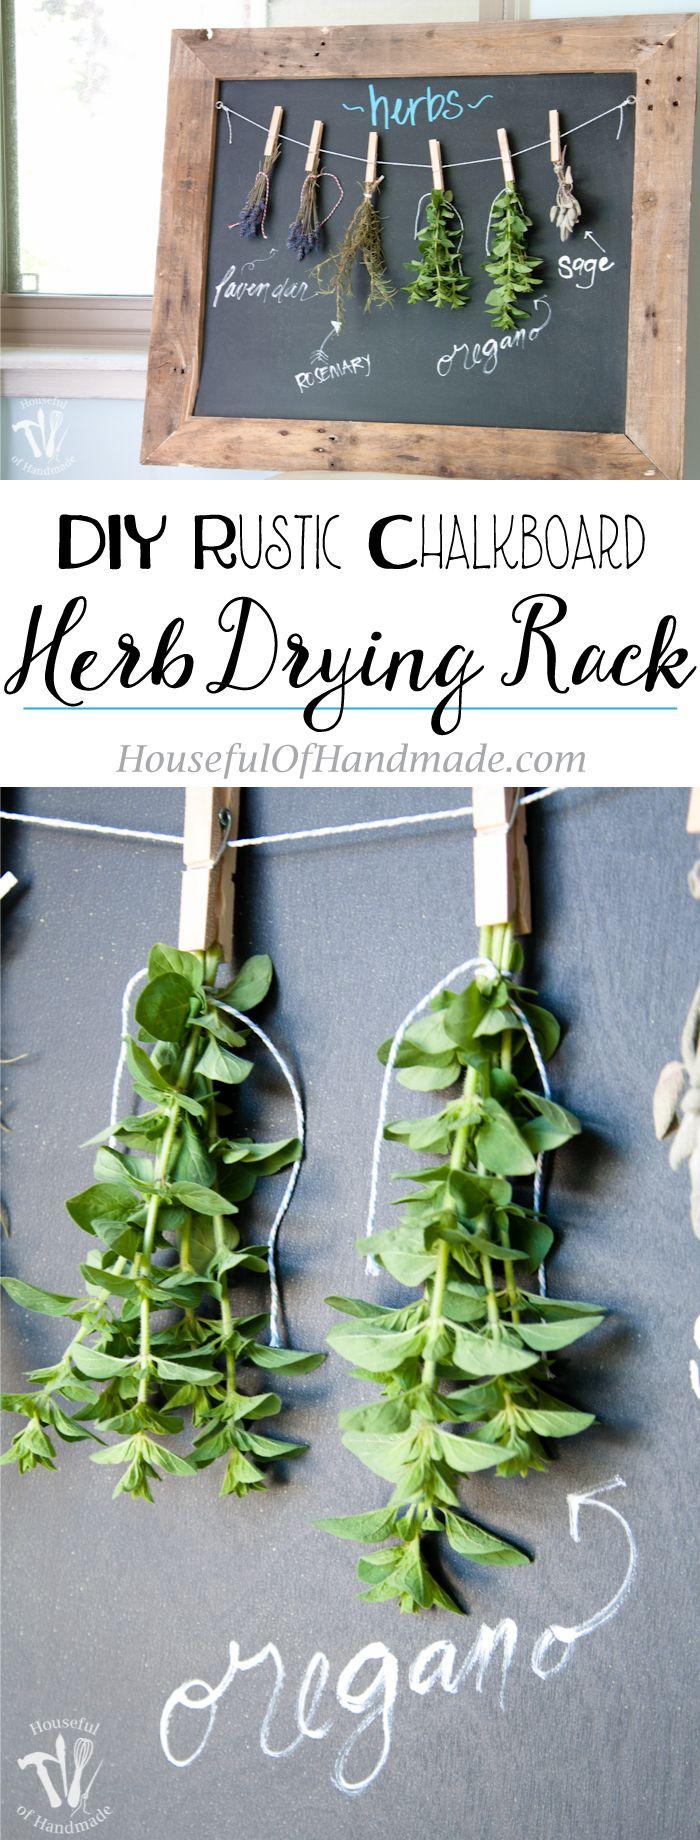 Wedding - DIY Rustic Chalkboard Herb Drying Rack